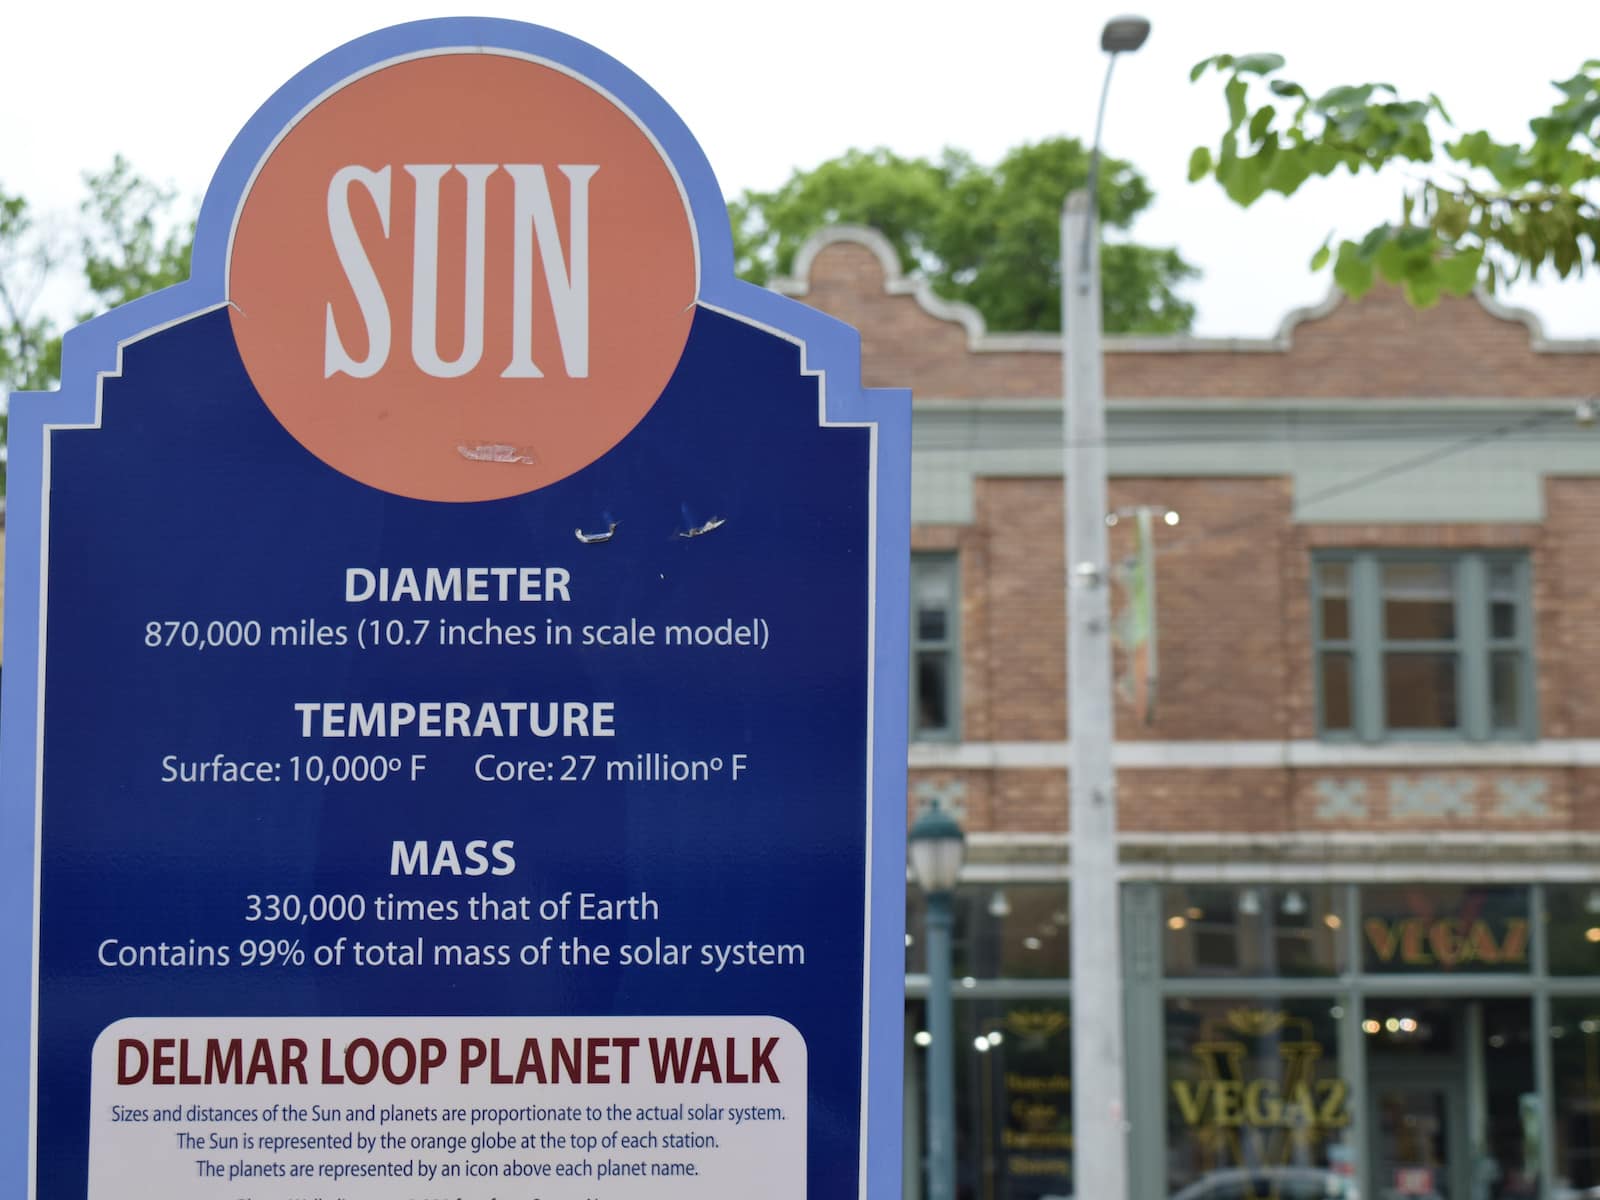 Planet Walk sign at the Delmar Loop